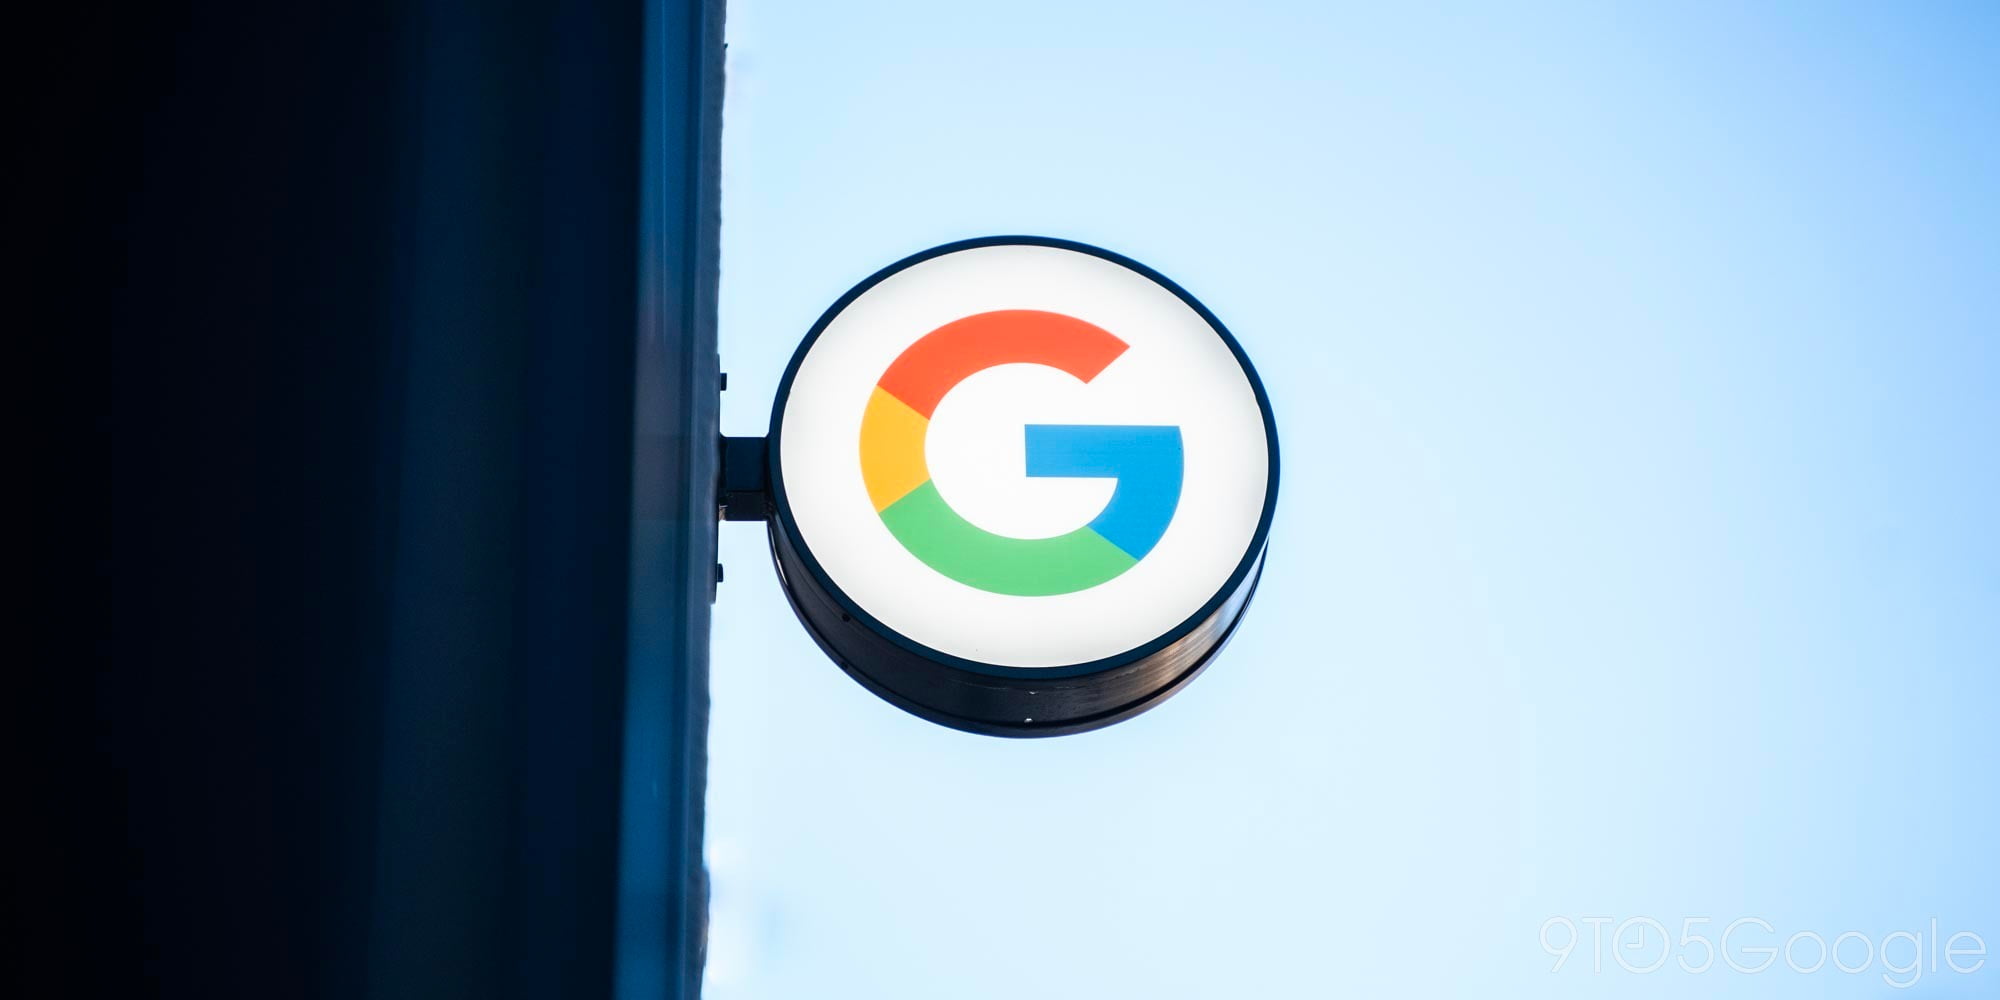 Google Pixel 3 Super Res Zoom